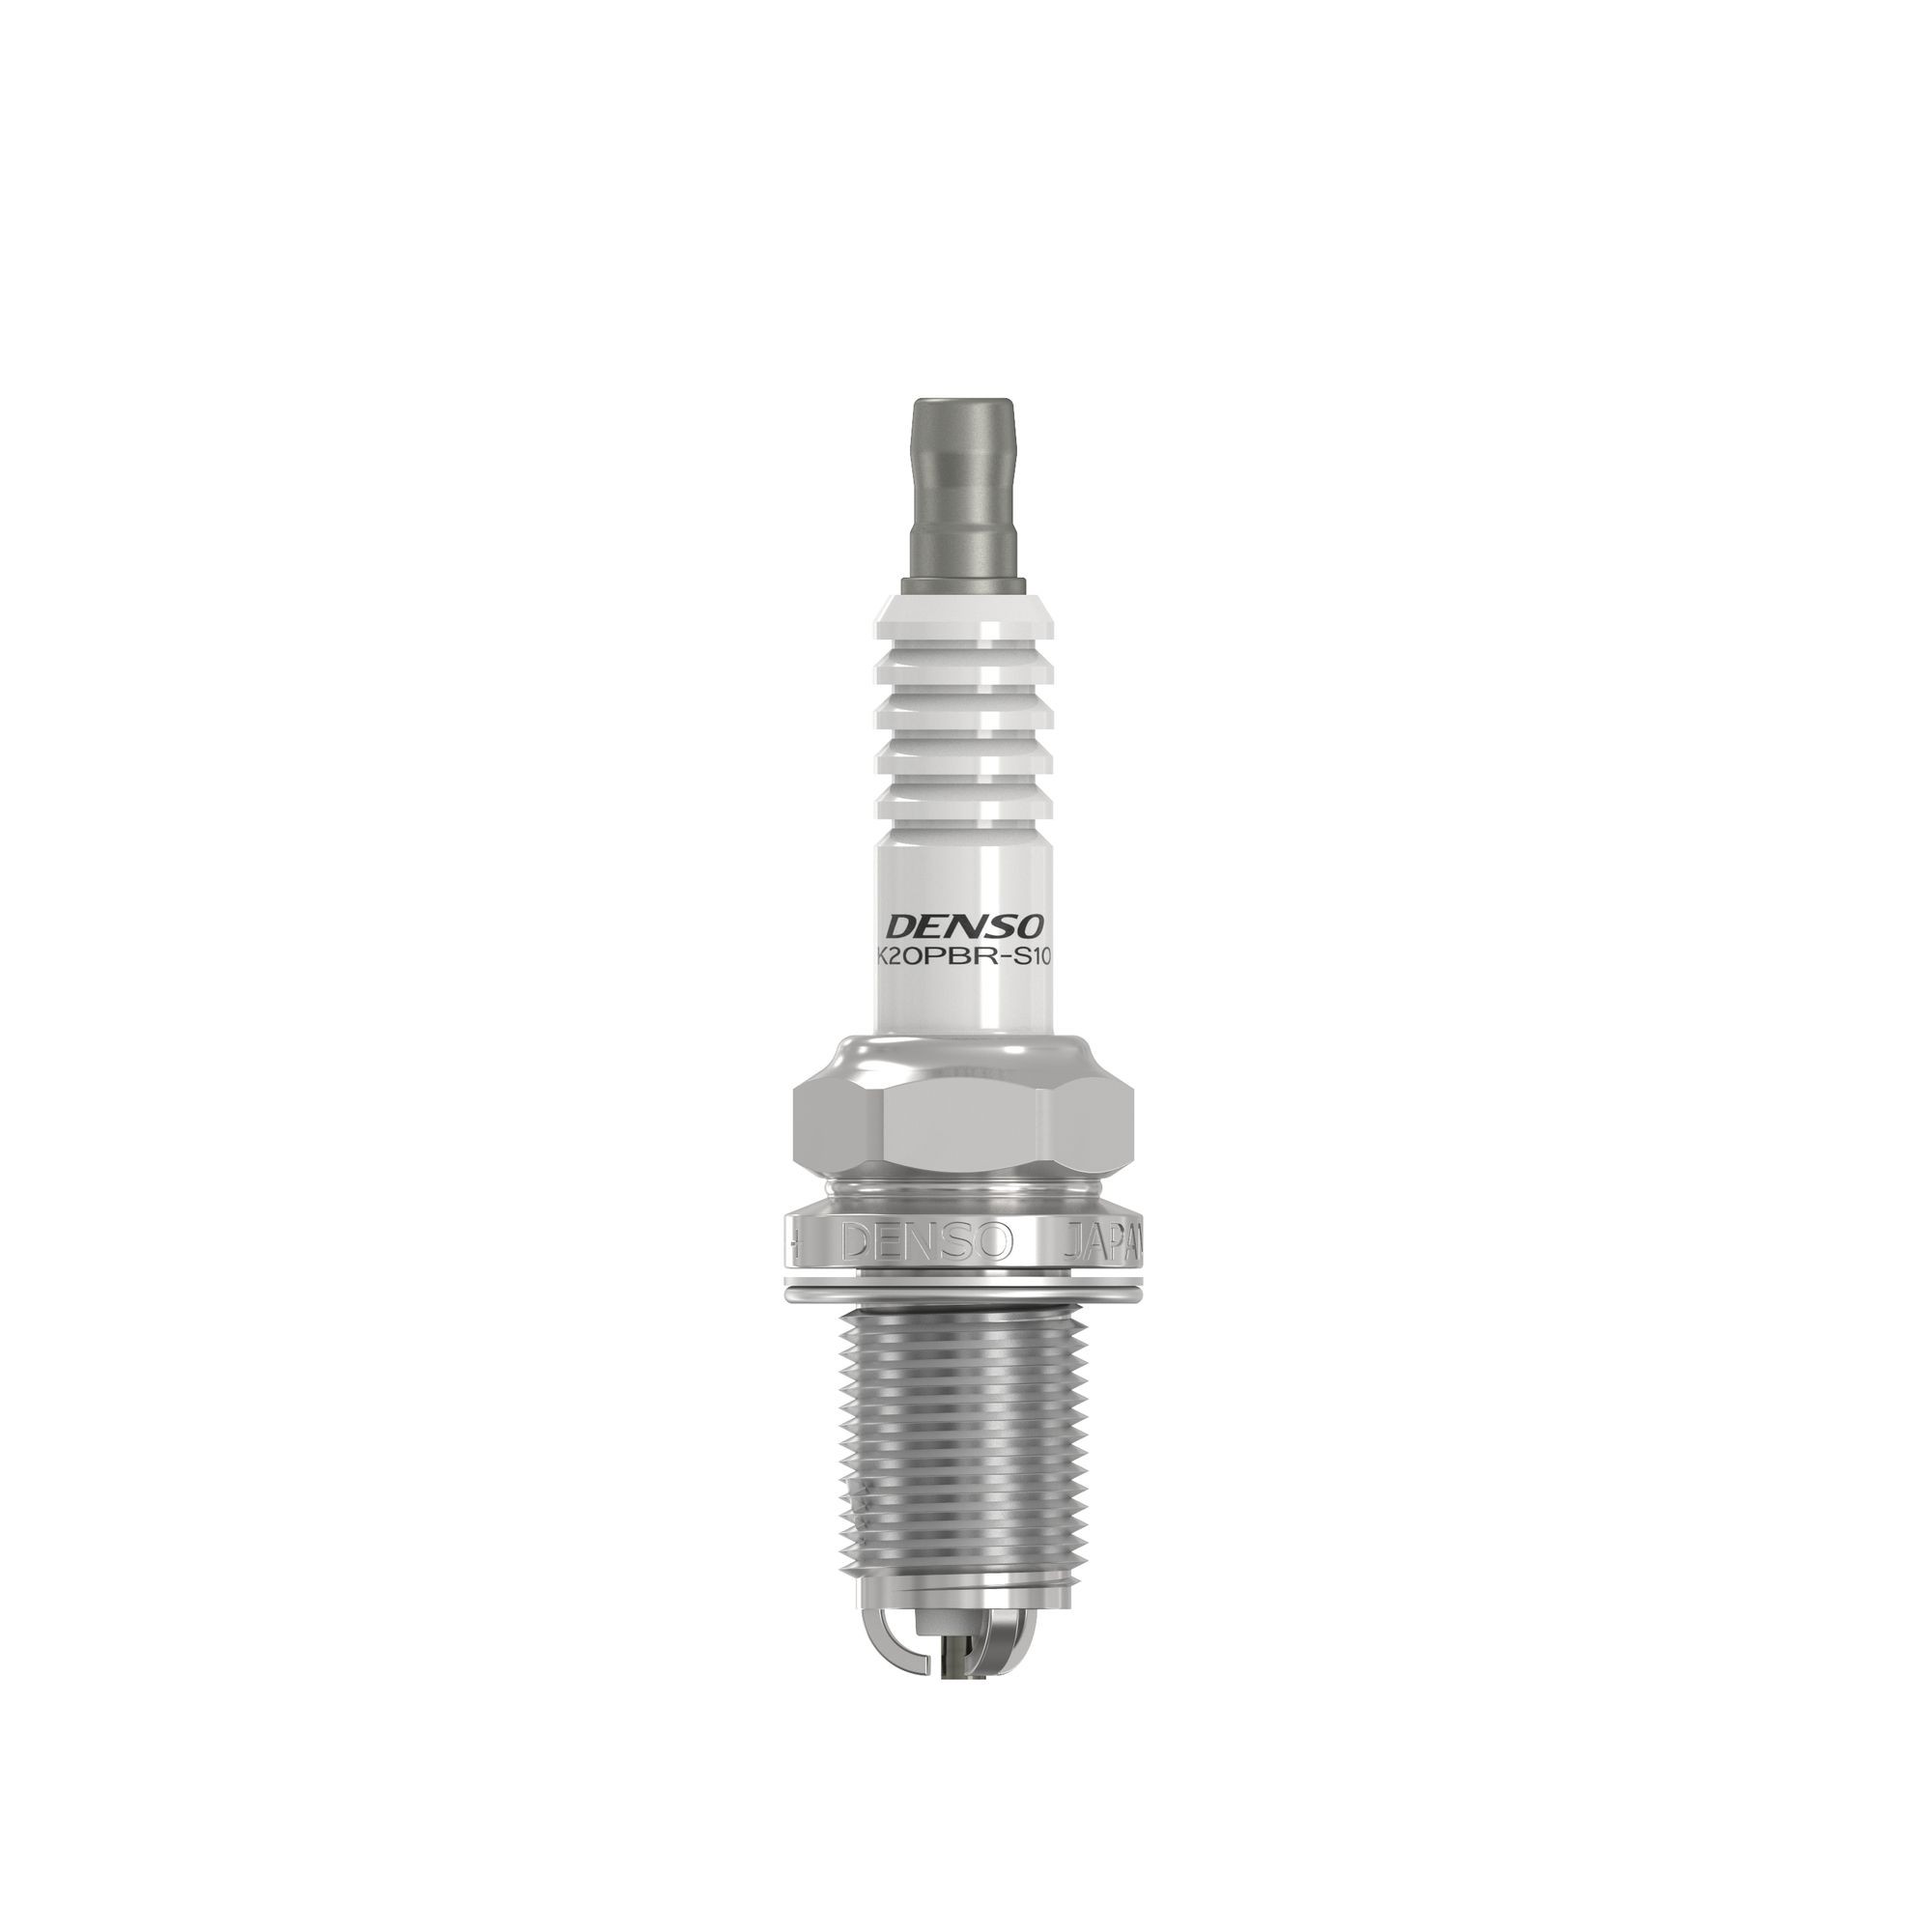 DENSO Nickel K20PBR-S10 Spark plug Spanner Size: 16